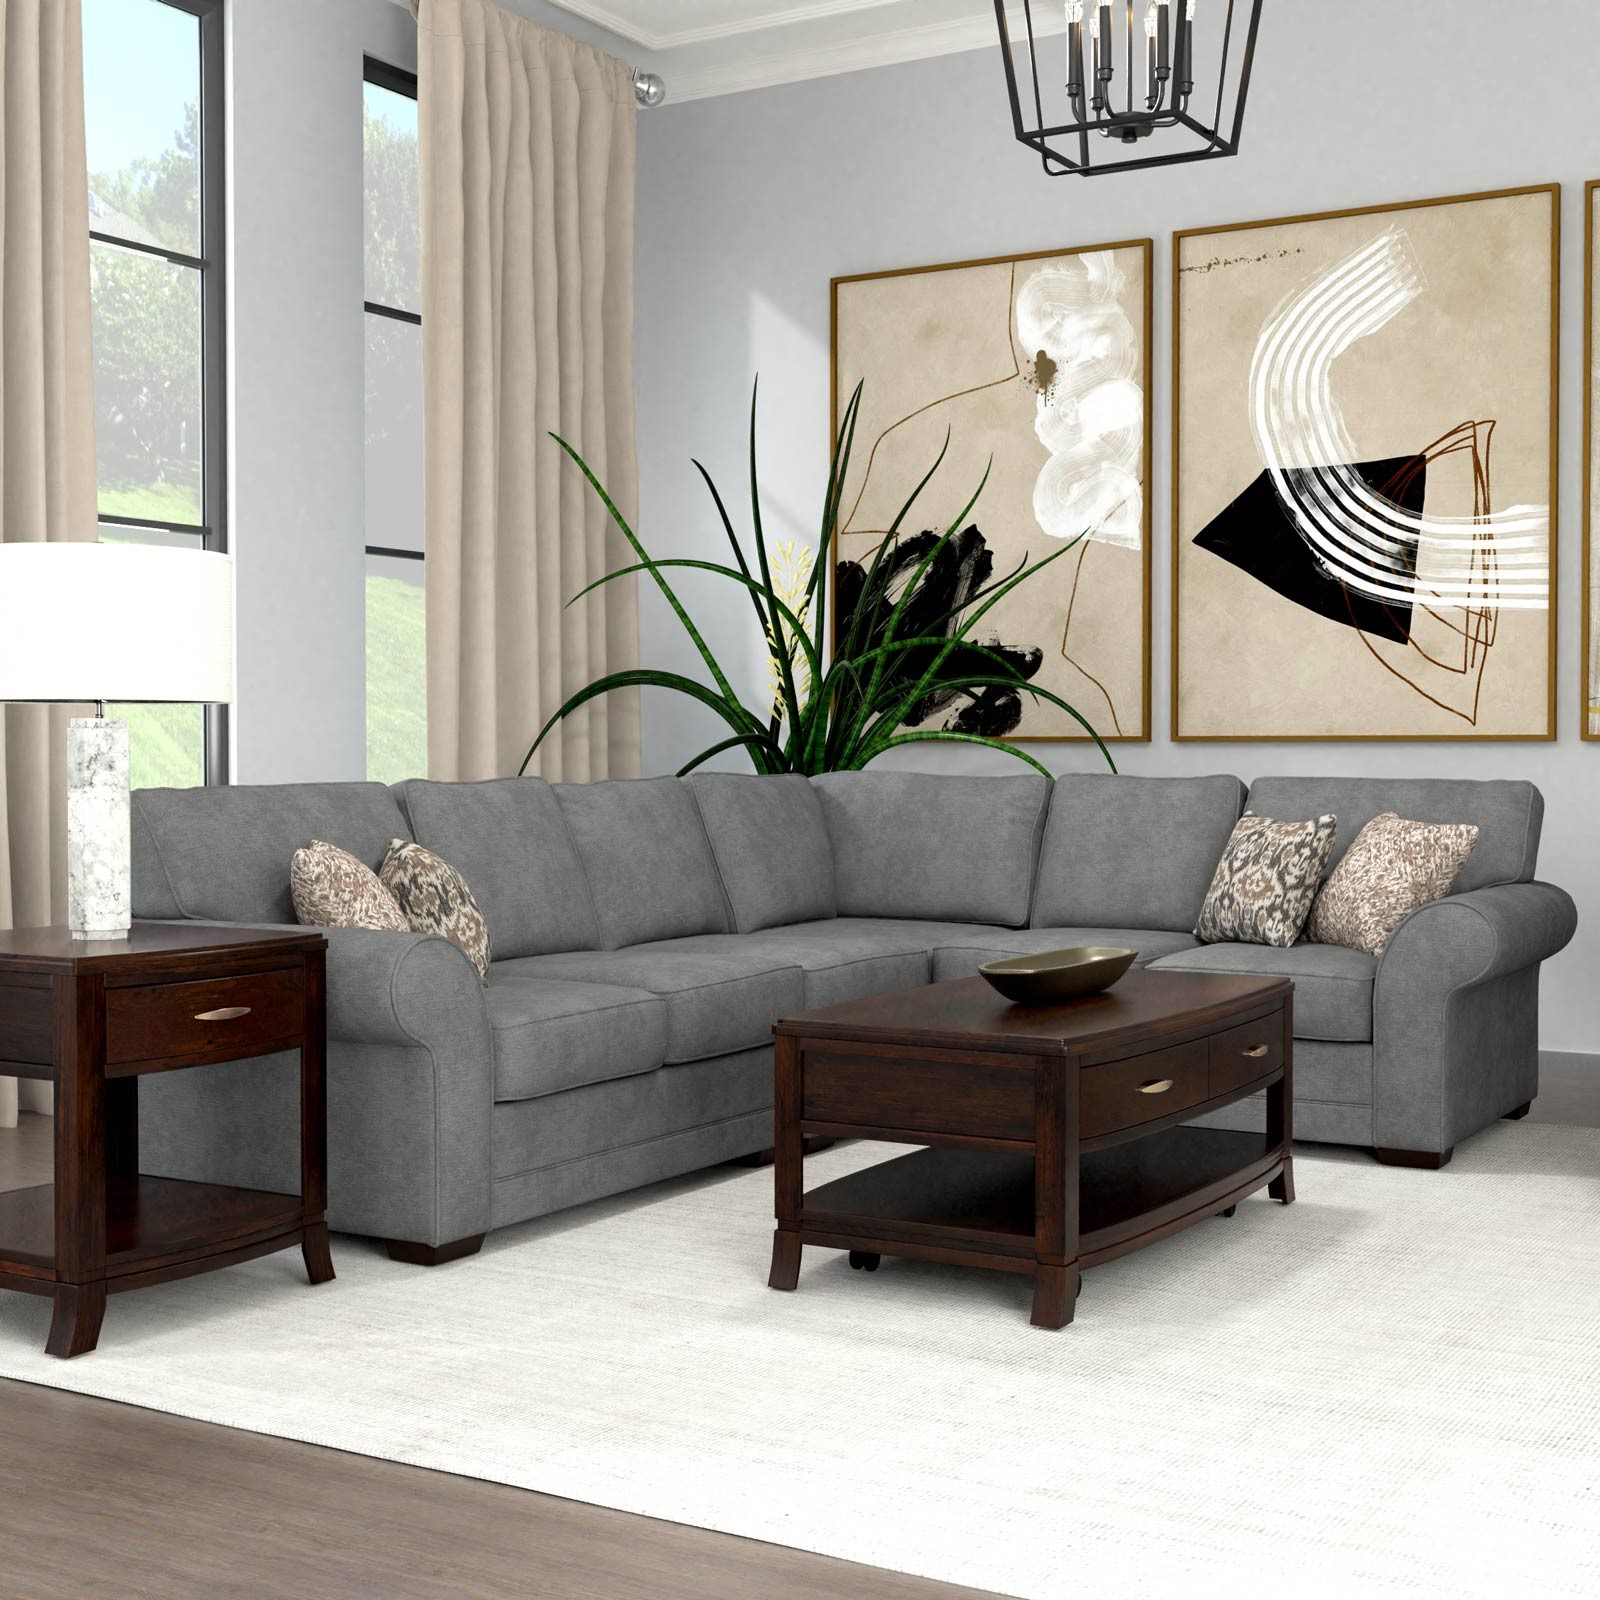 England Furniture Brantley Brevard Grey 4-Piece Sectional Sofa